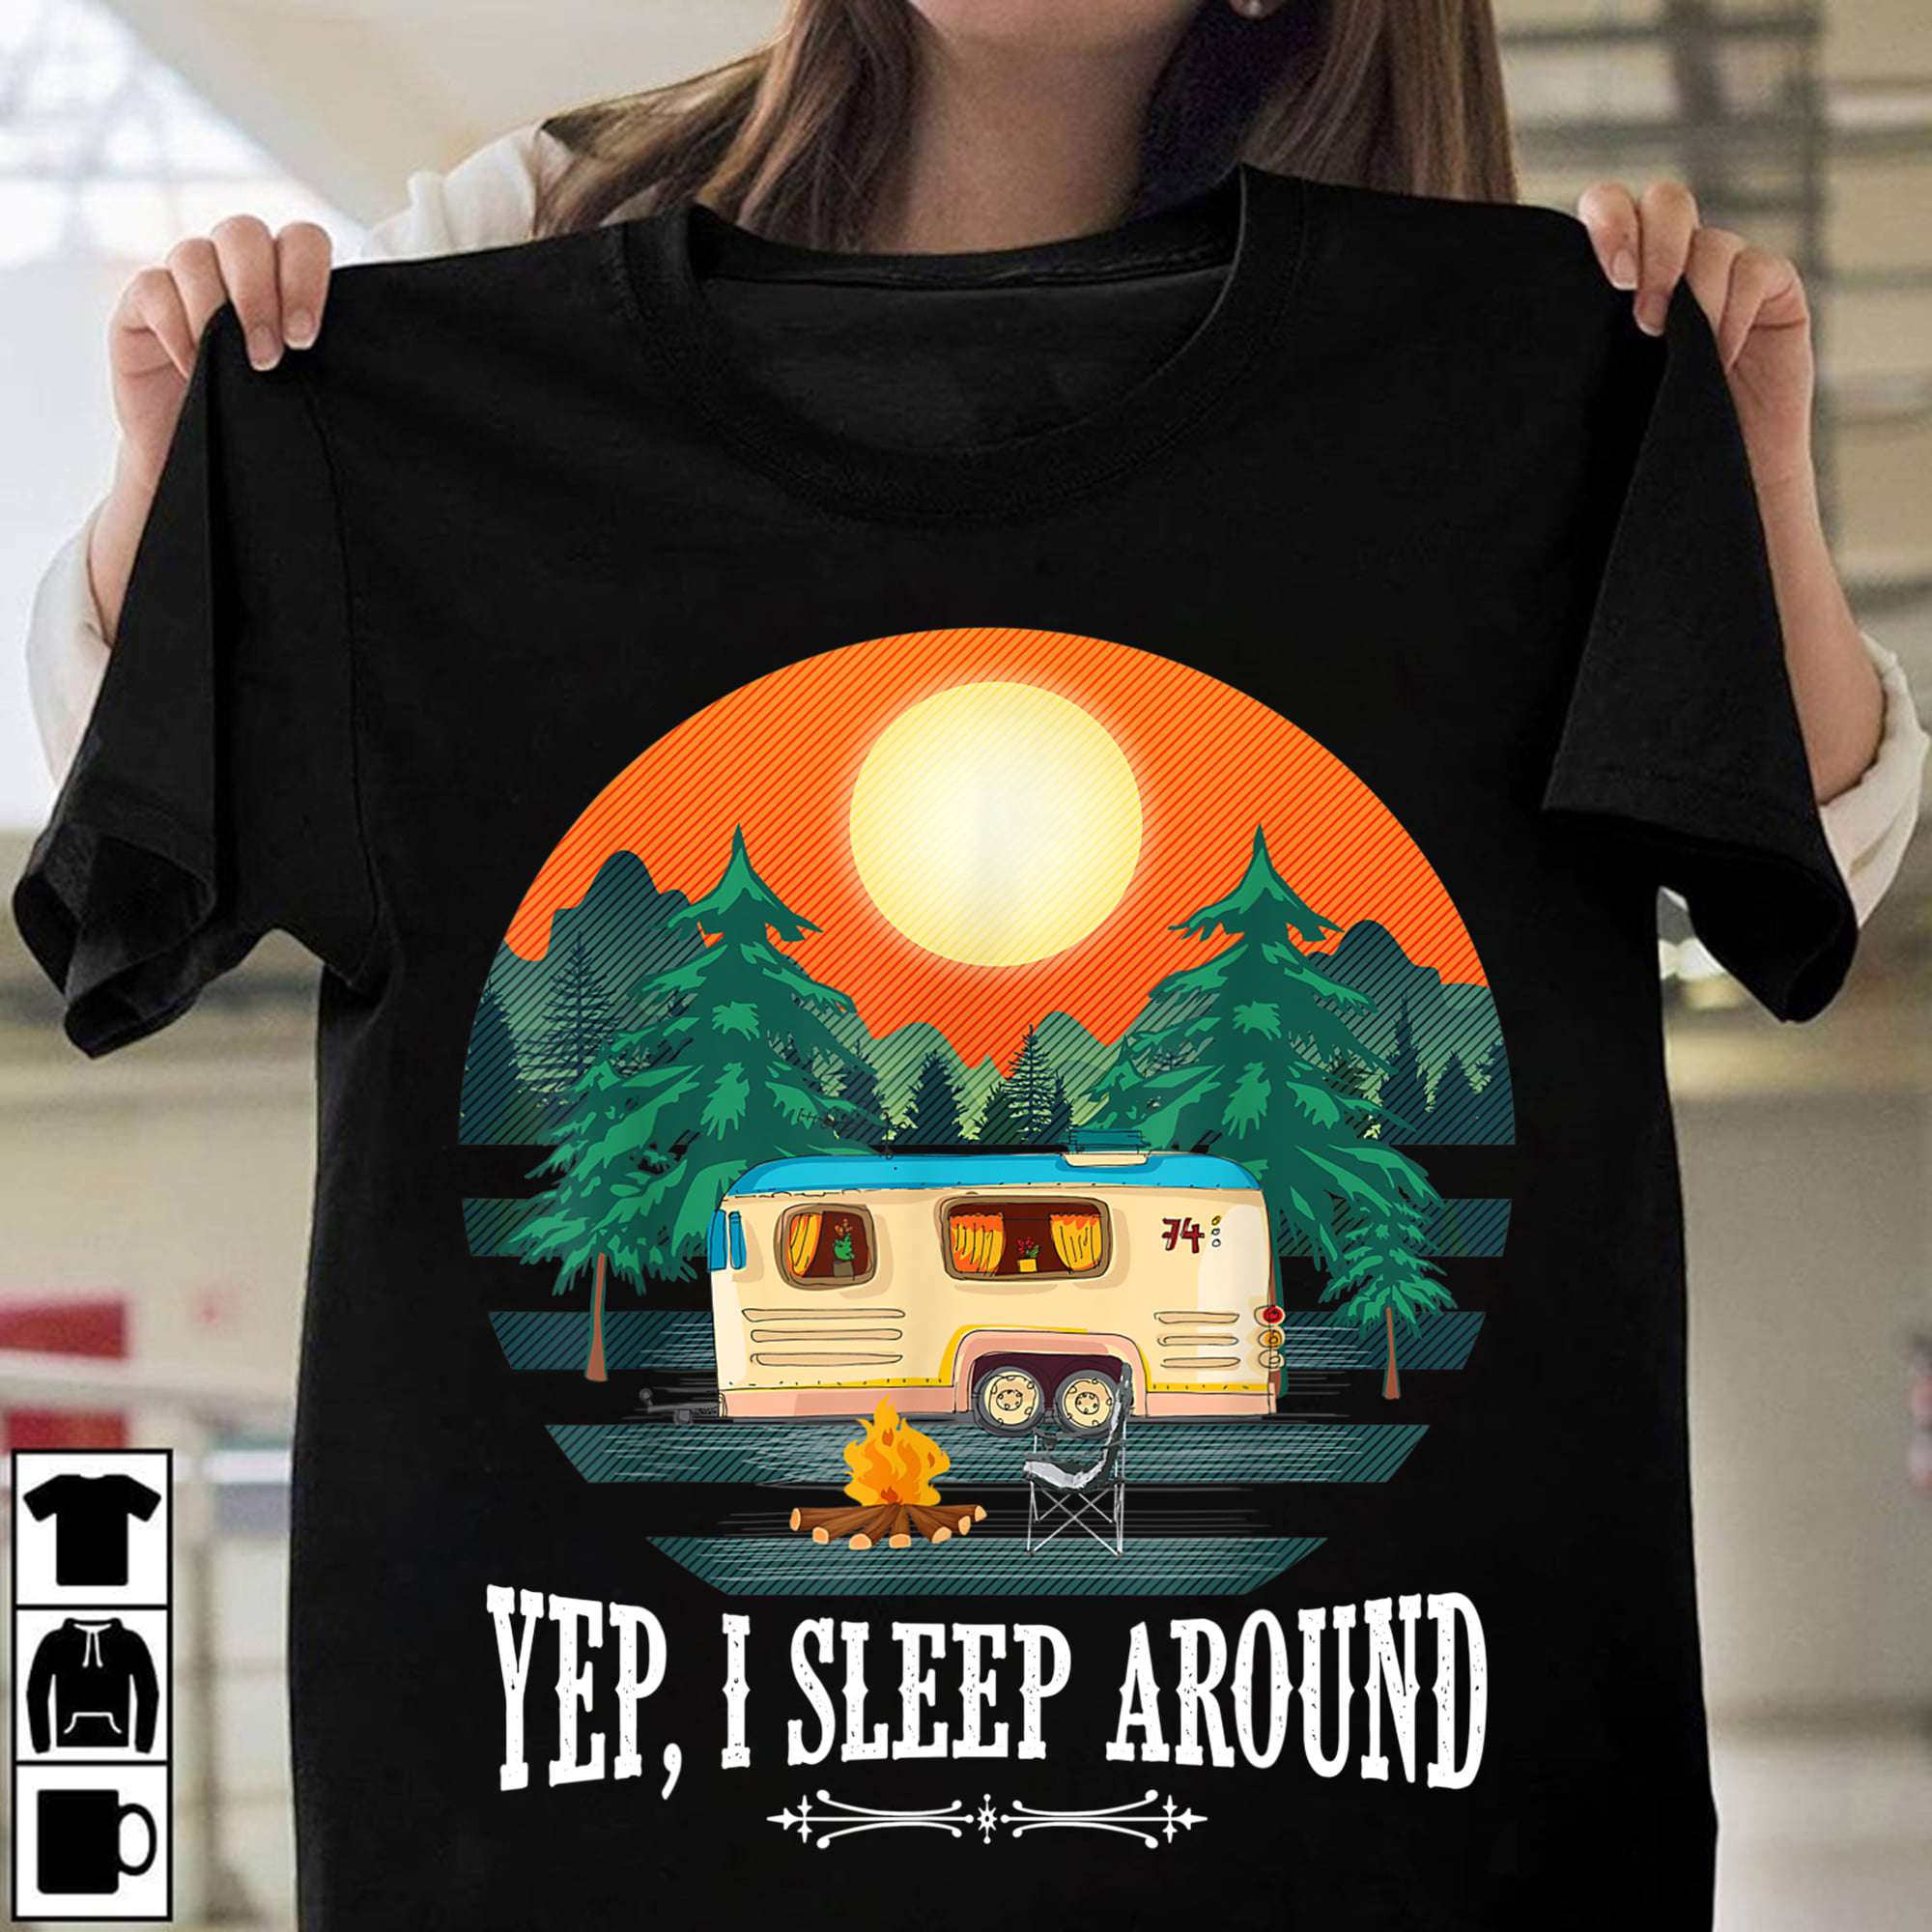 Yep, I sleep around - Sleep on the camping car, camping hippie lifestyle